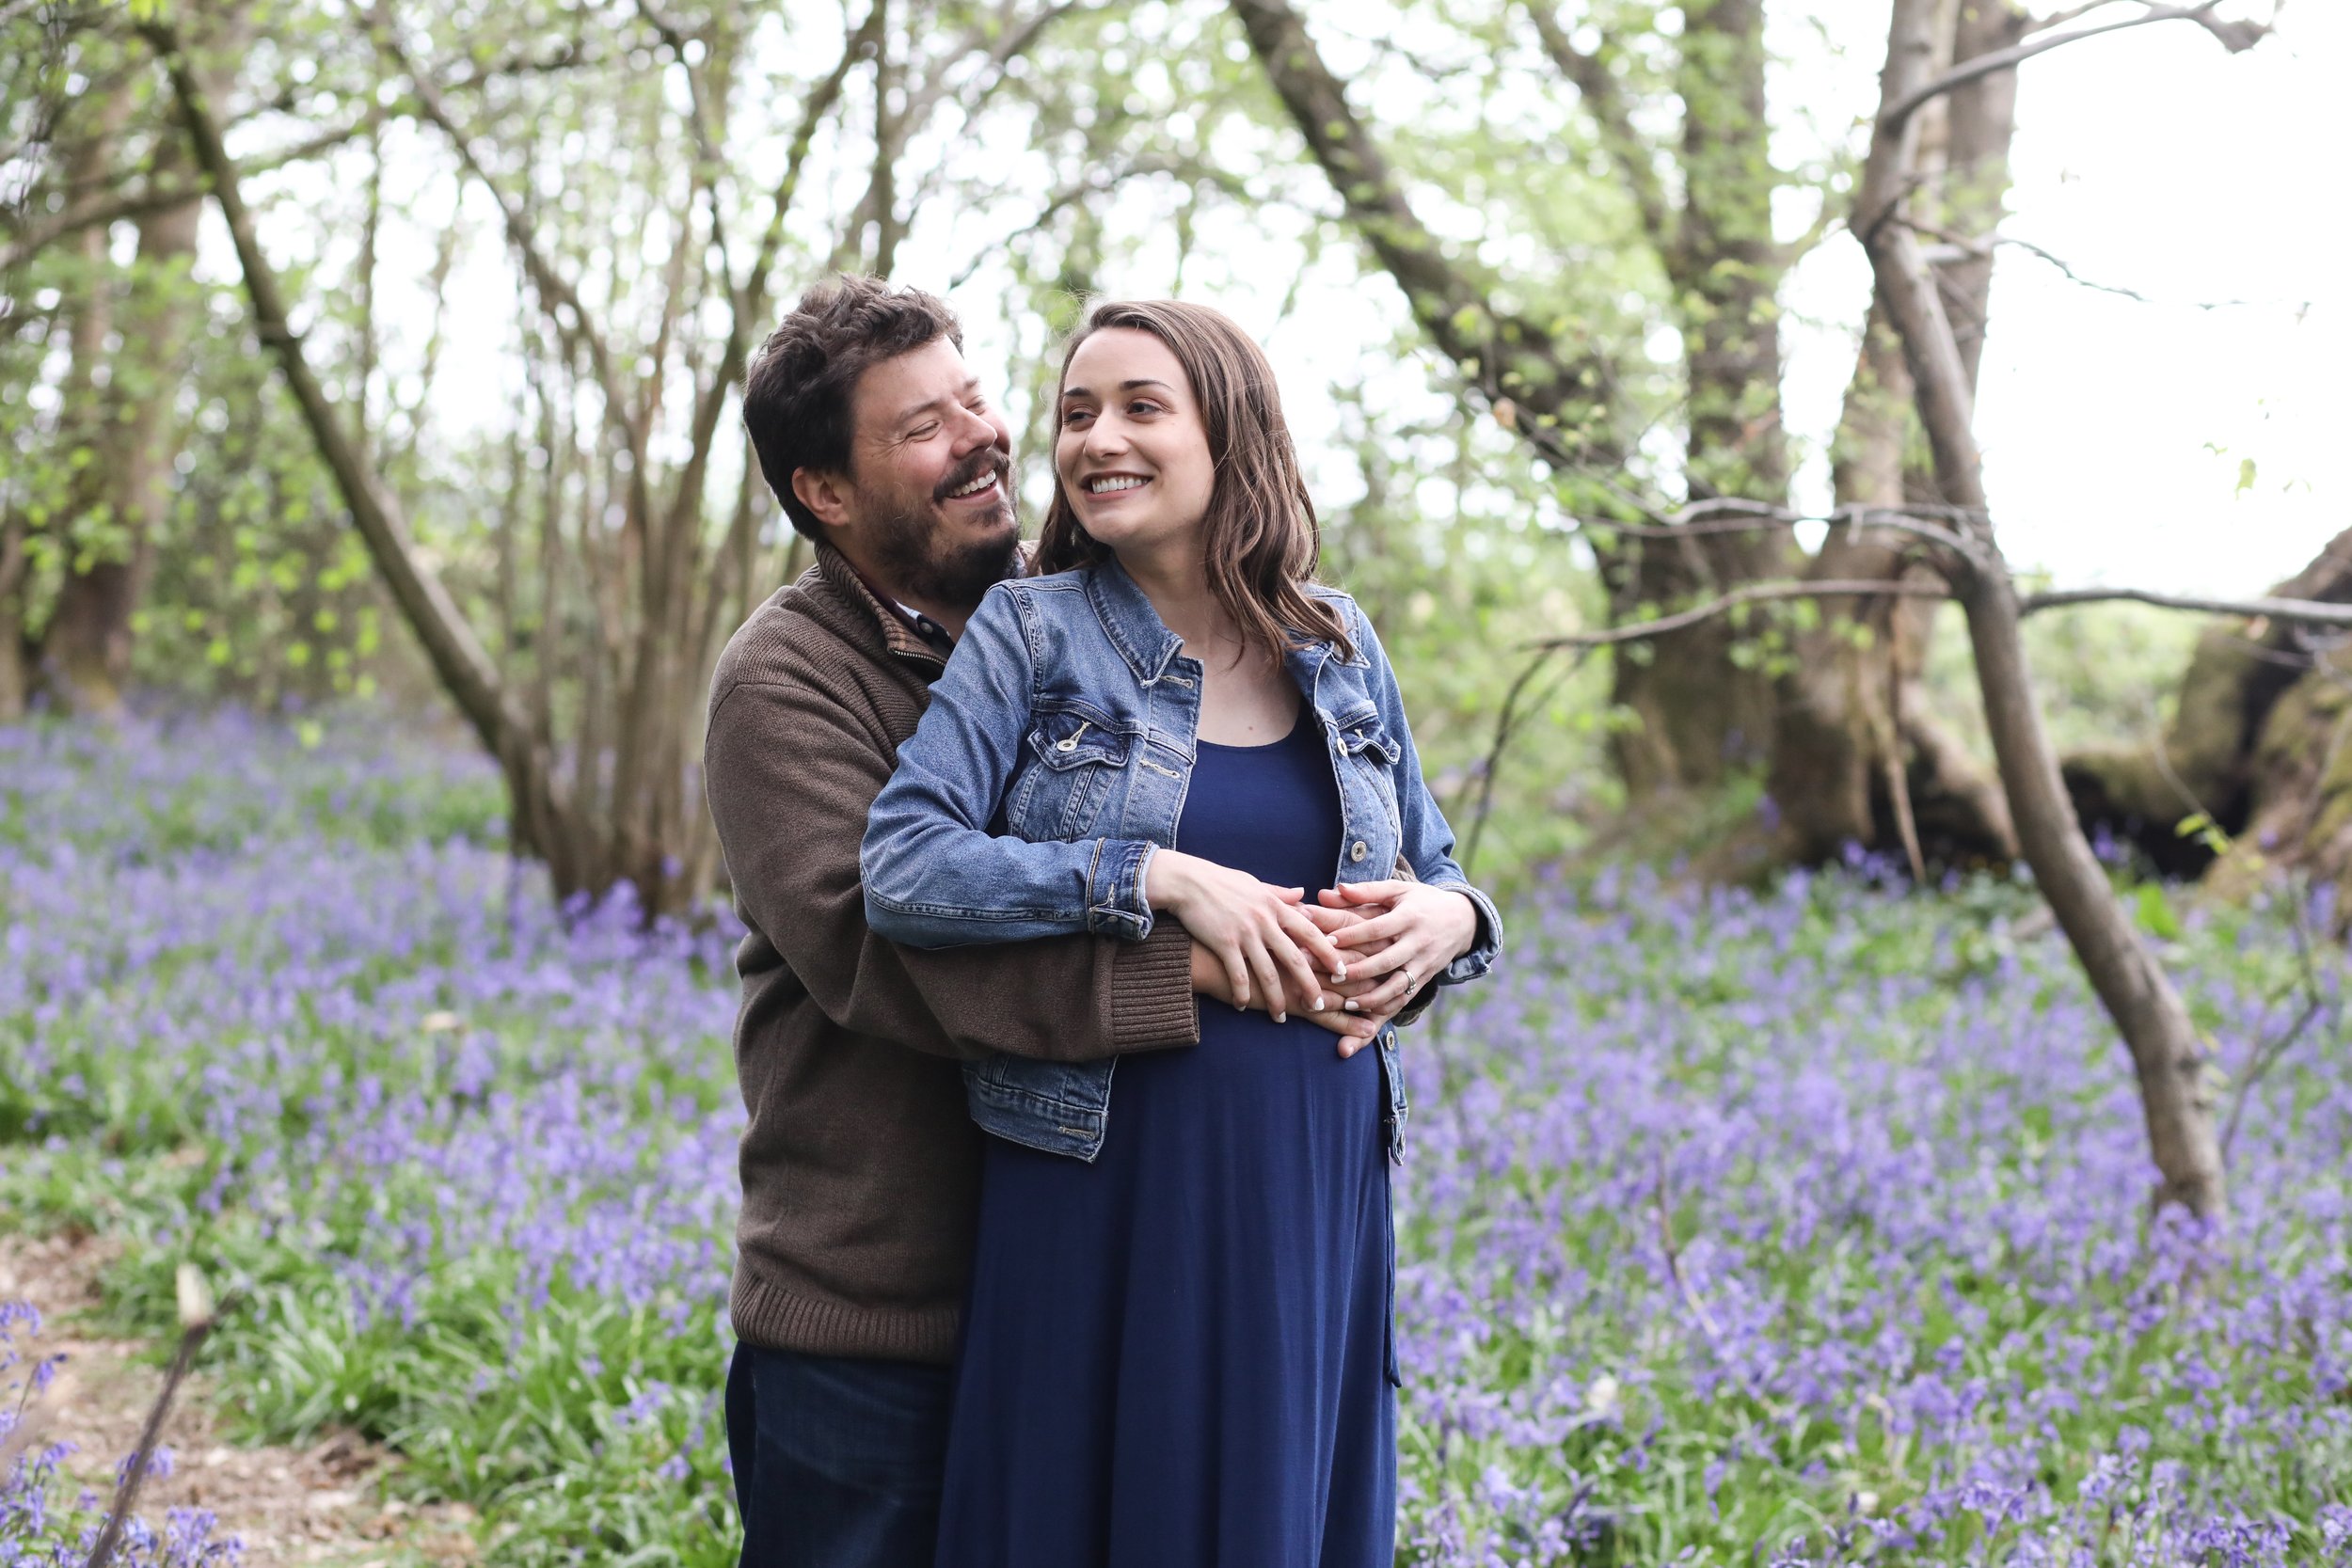 Maternity photo shoot in Berkshire | Bluebell pregnancy photos with Sarah & Bob96 choice .JPG